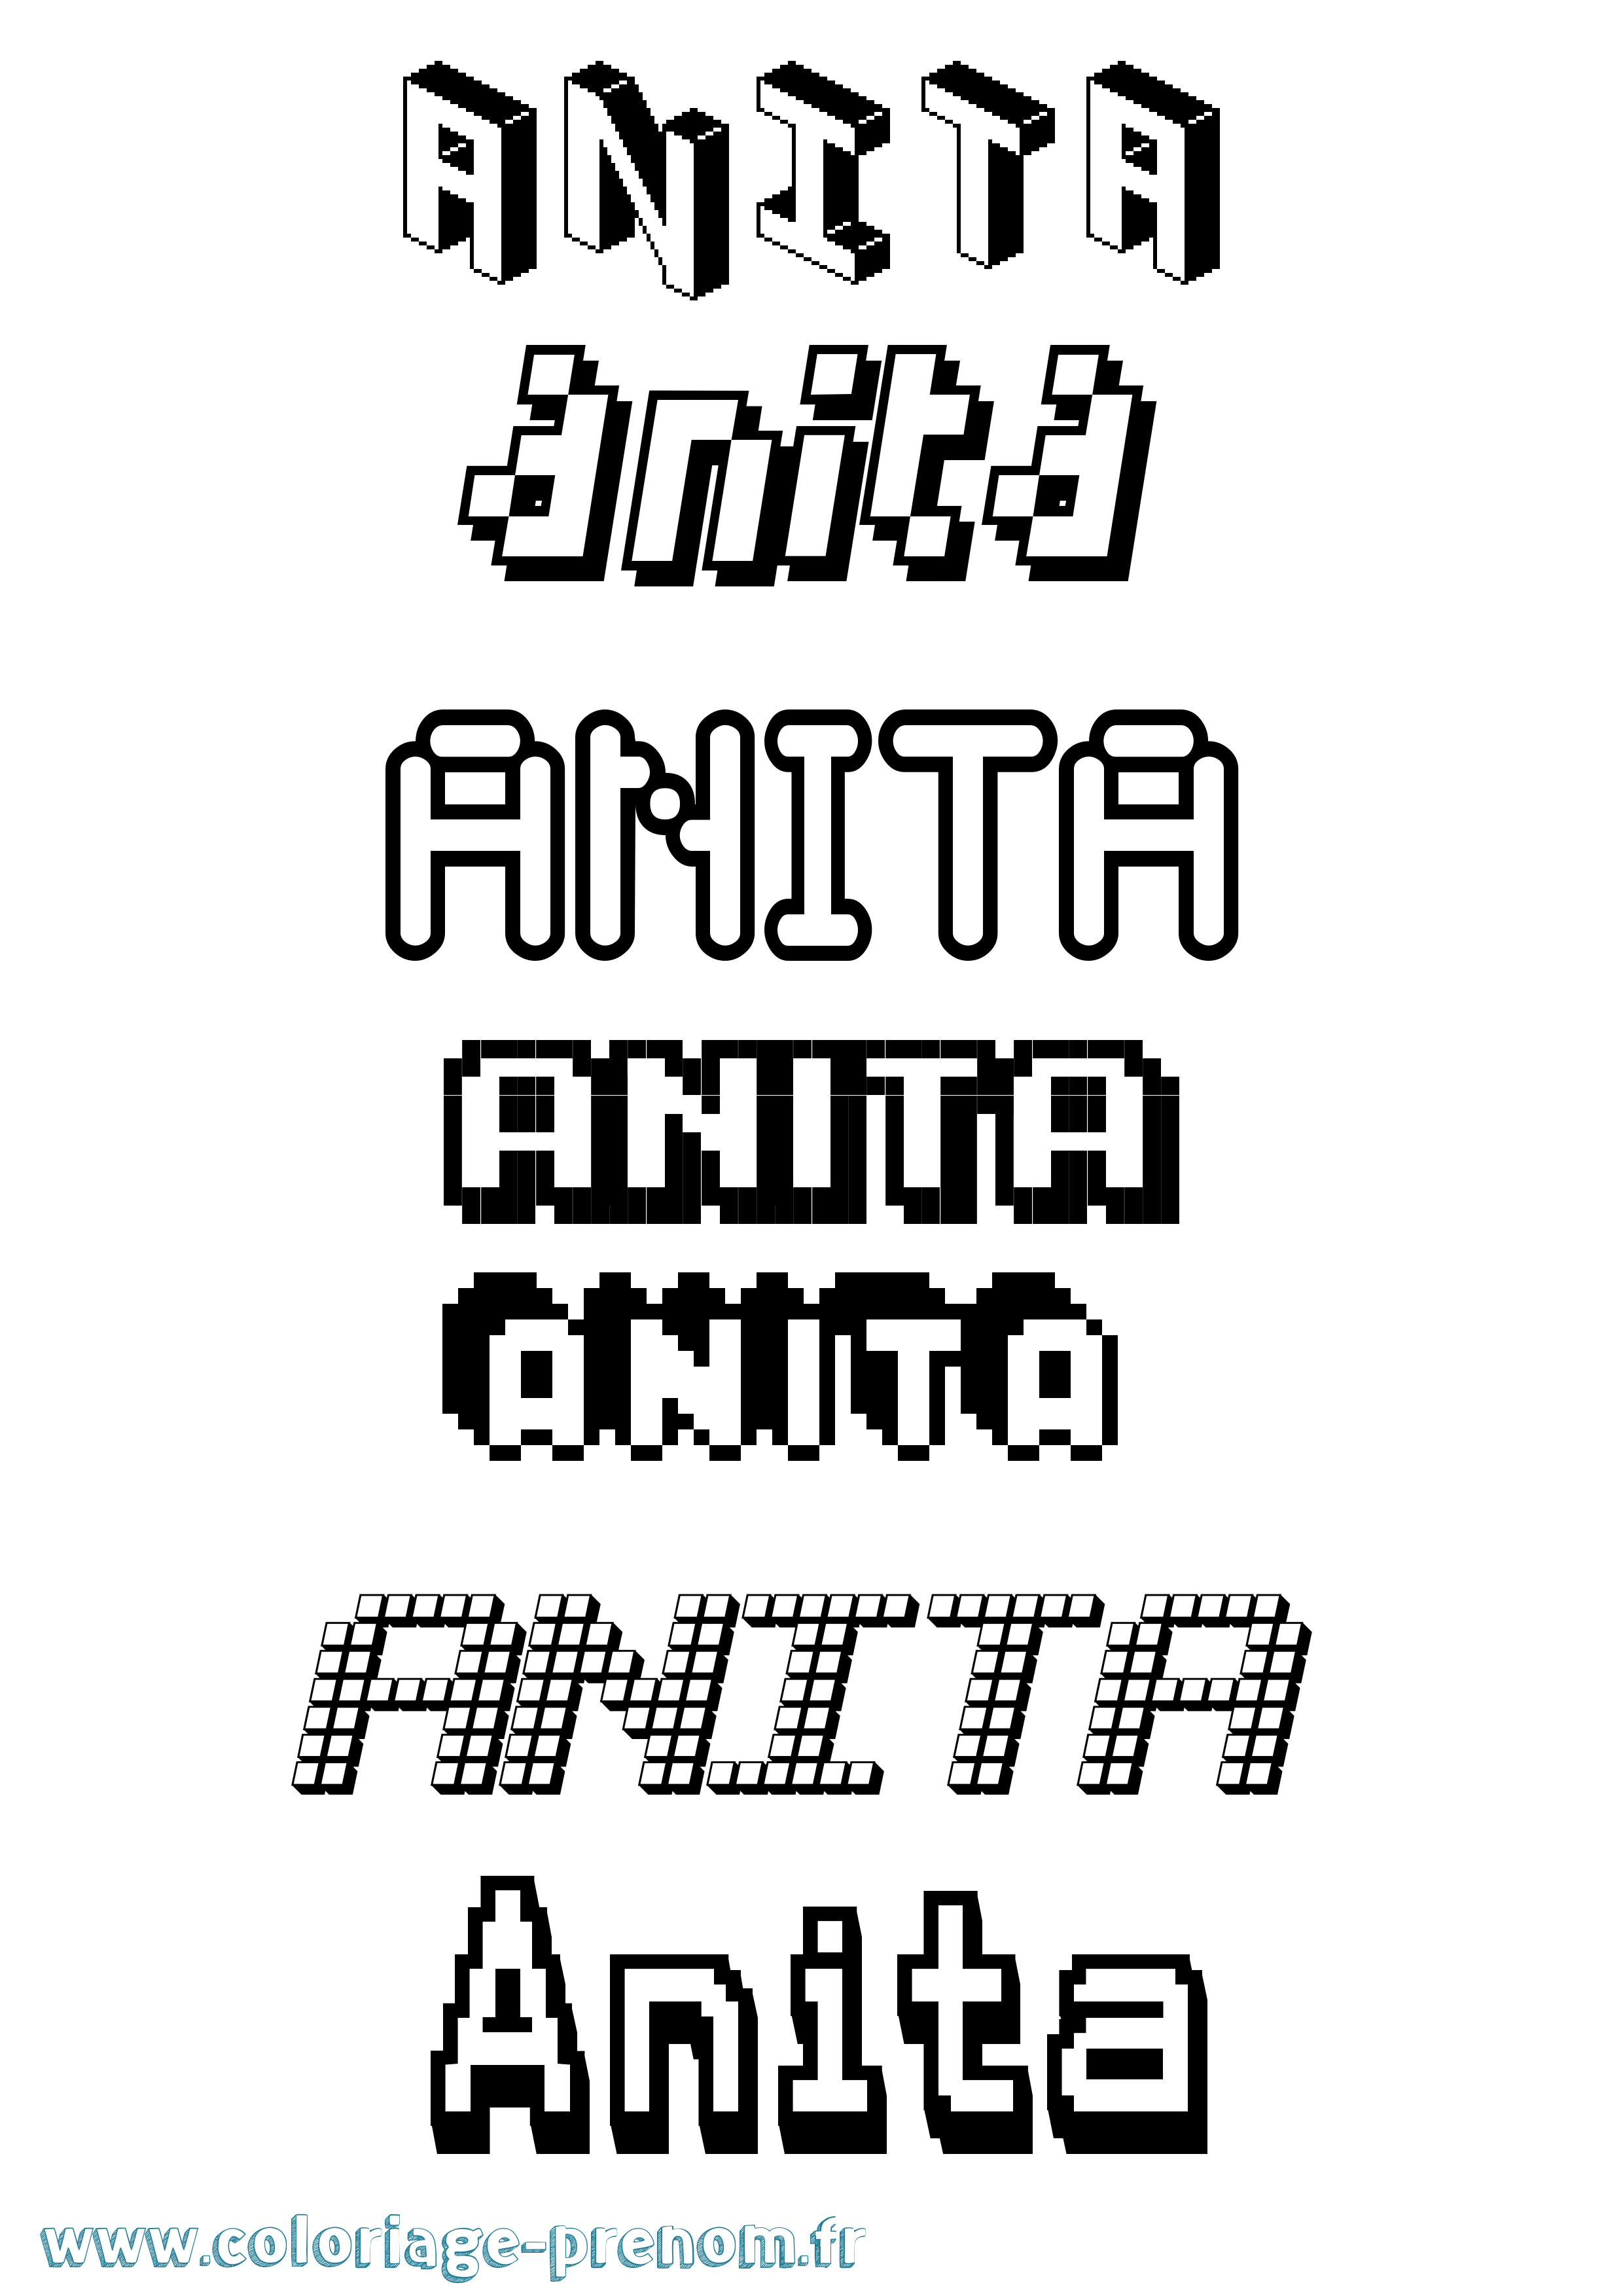 Coloriage prénom Anita Pixel